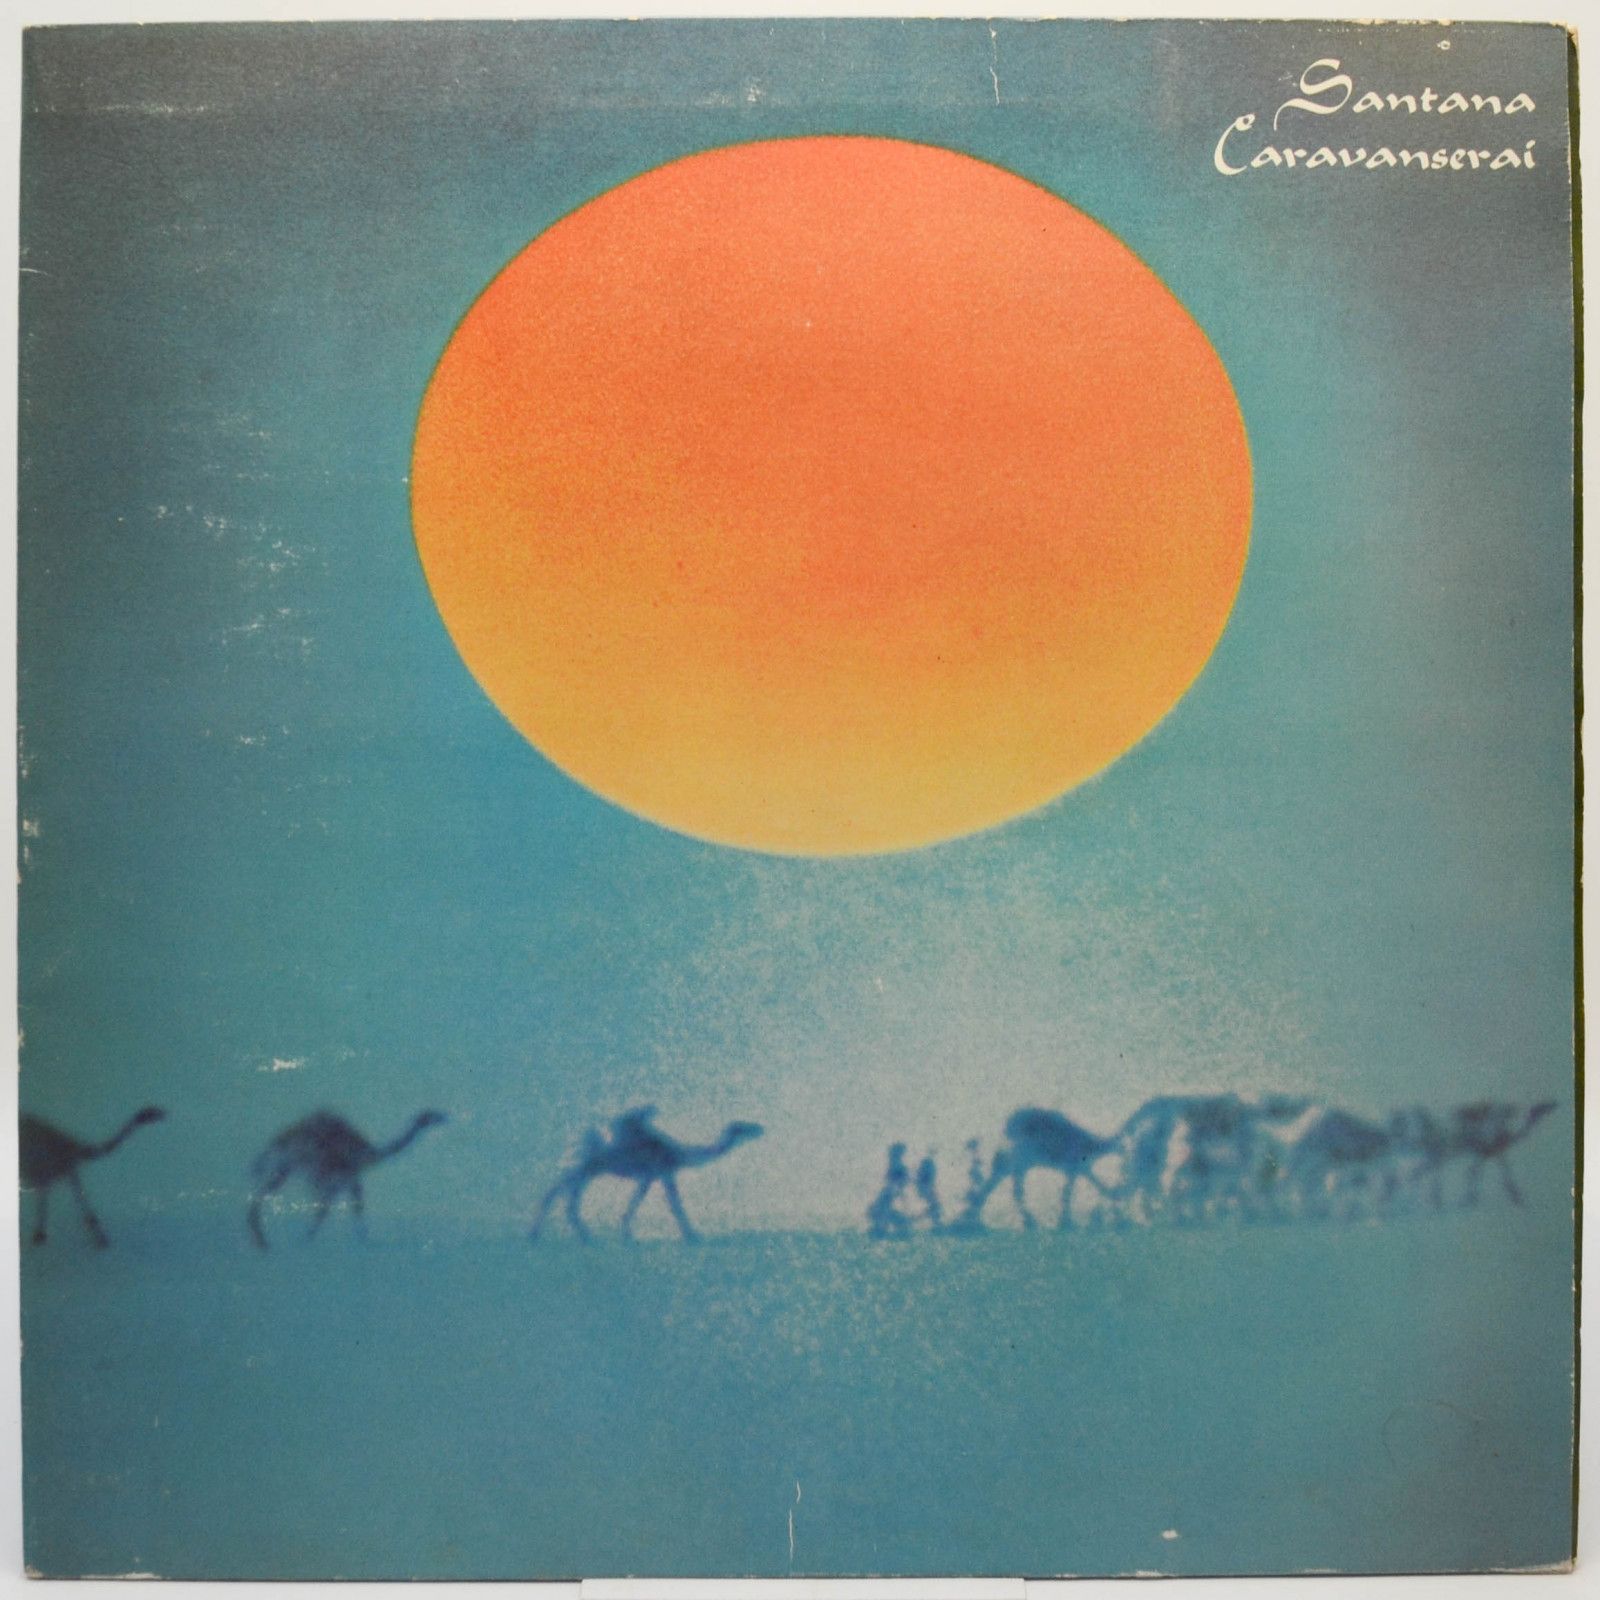 Santana — Caravanserai, 1972